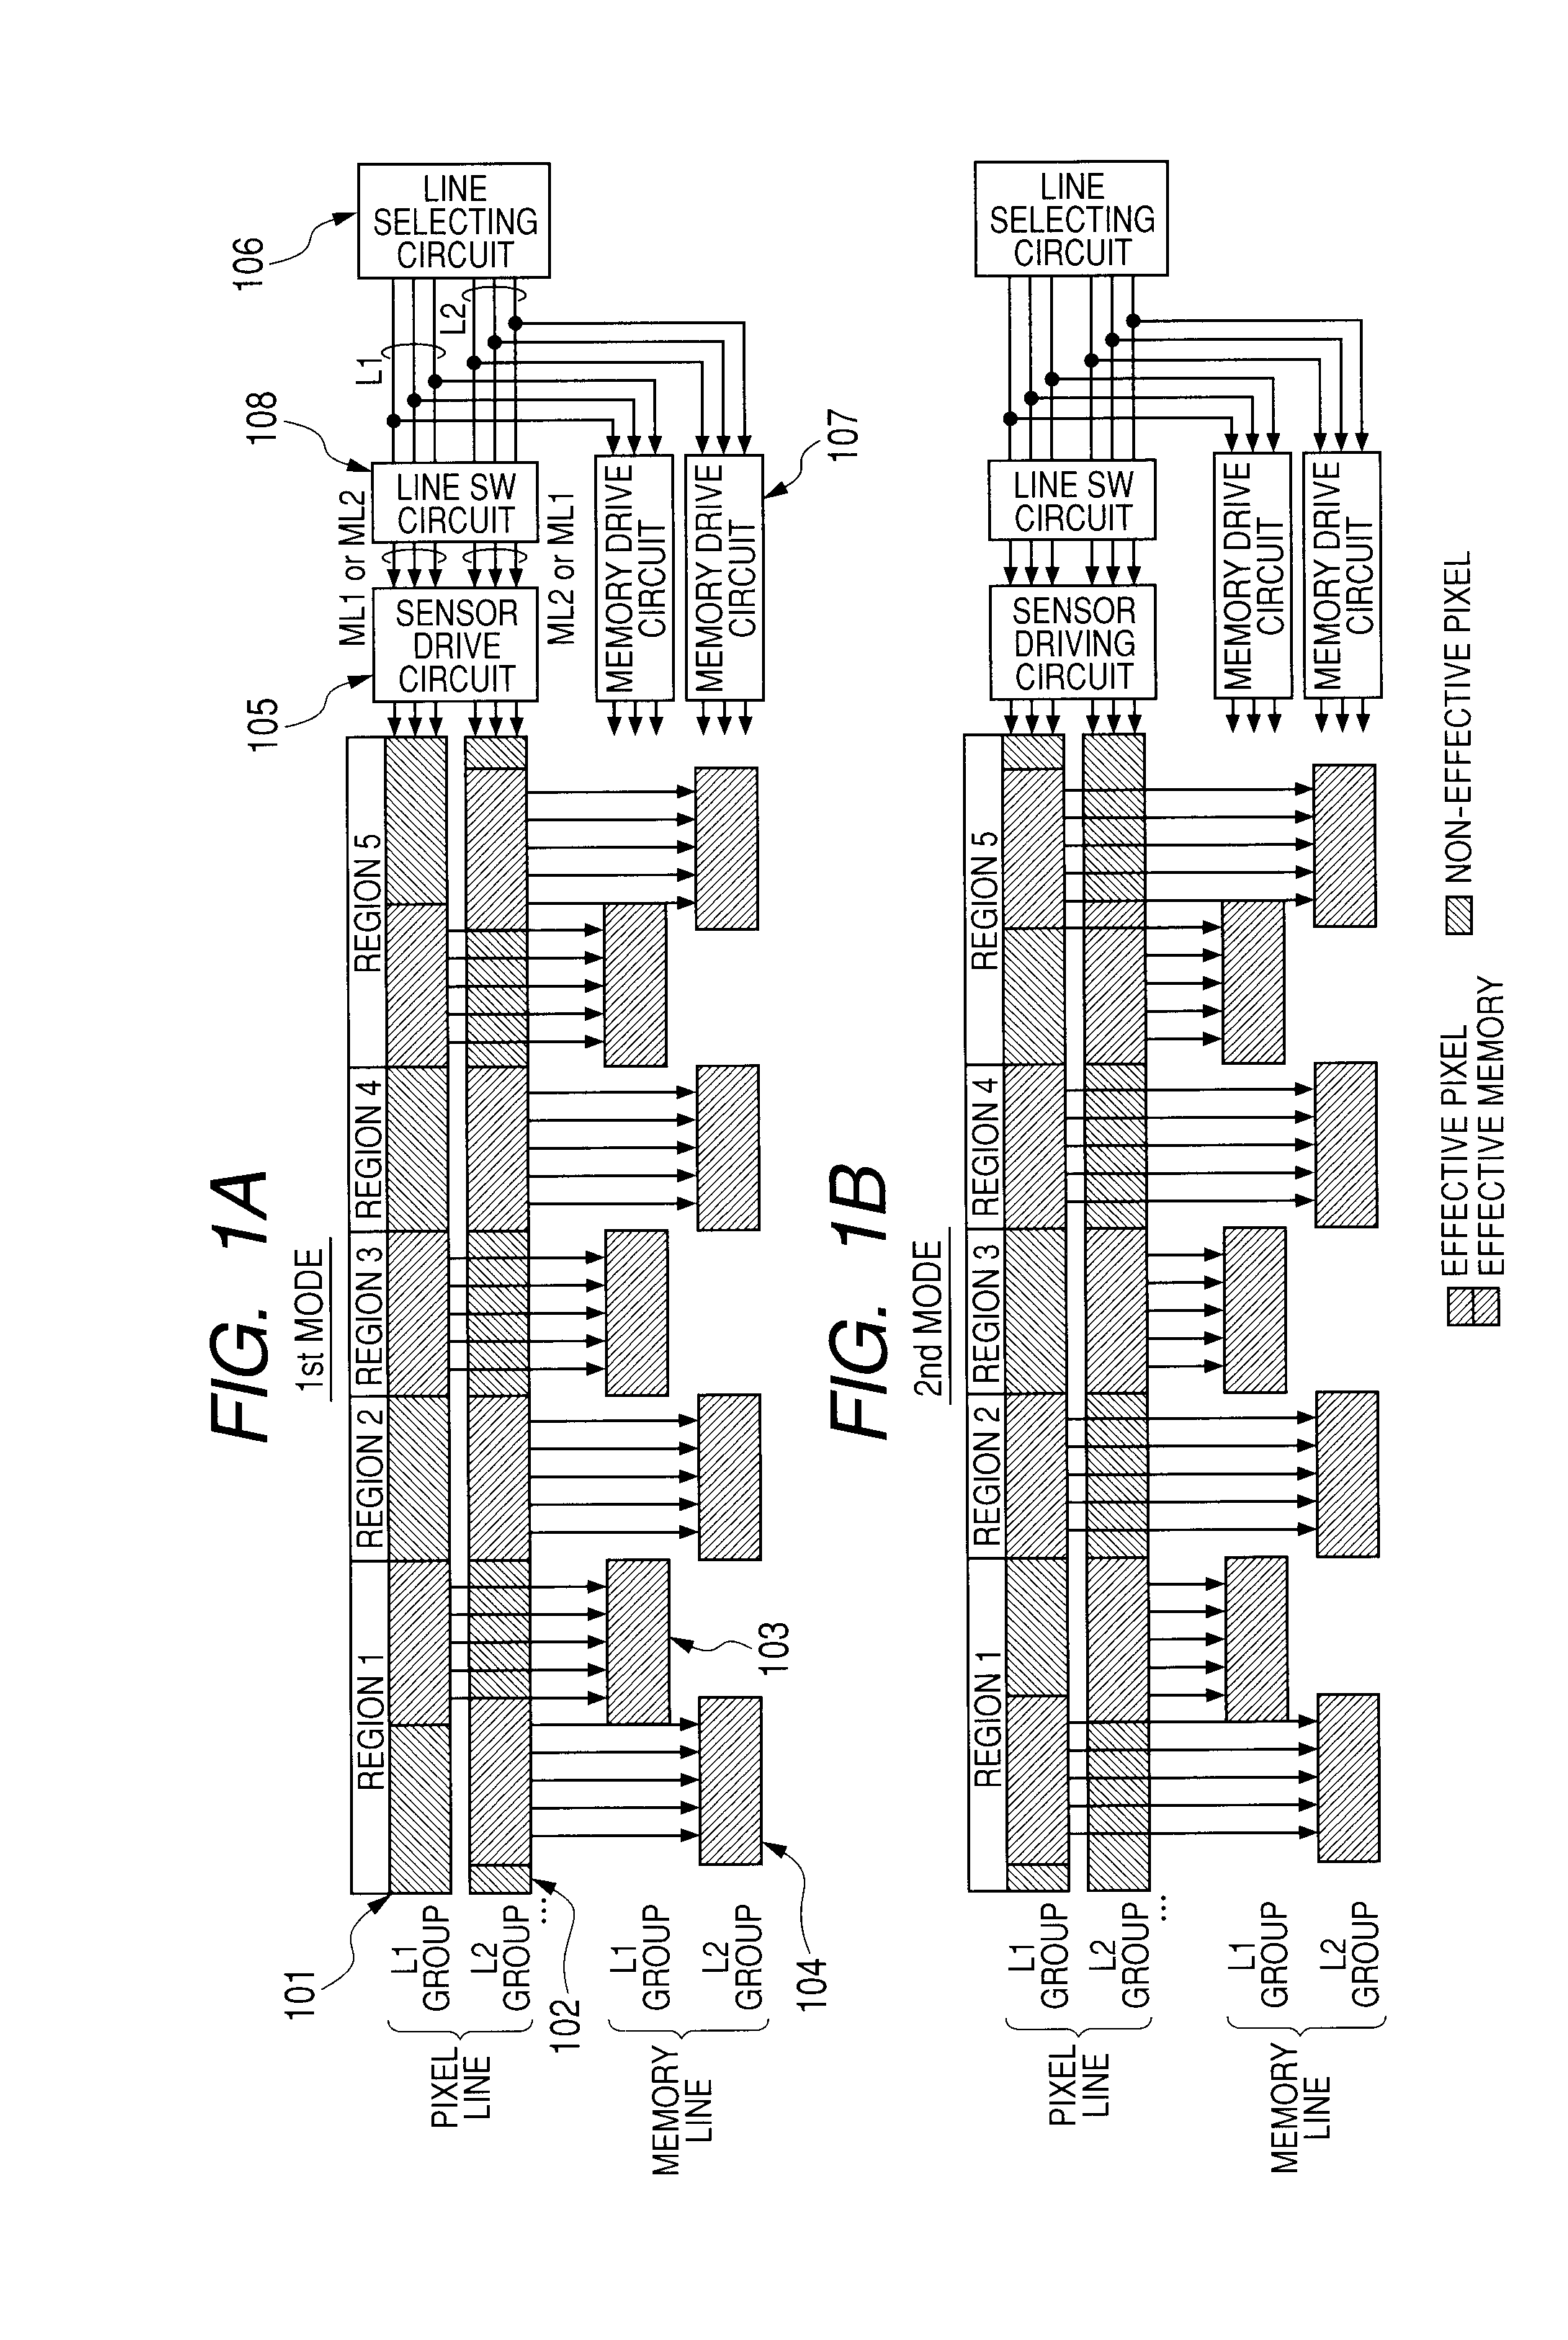 Photoelectric conversion apparatus